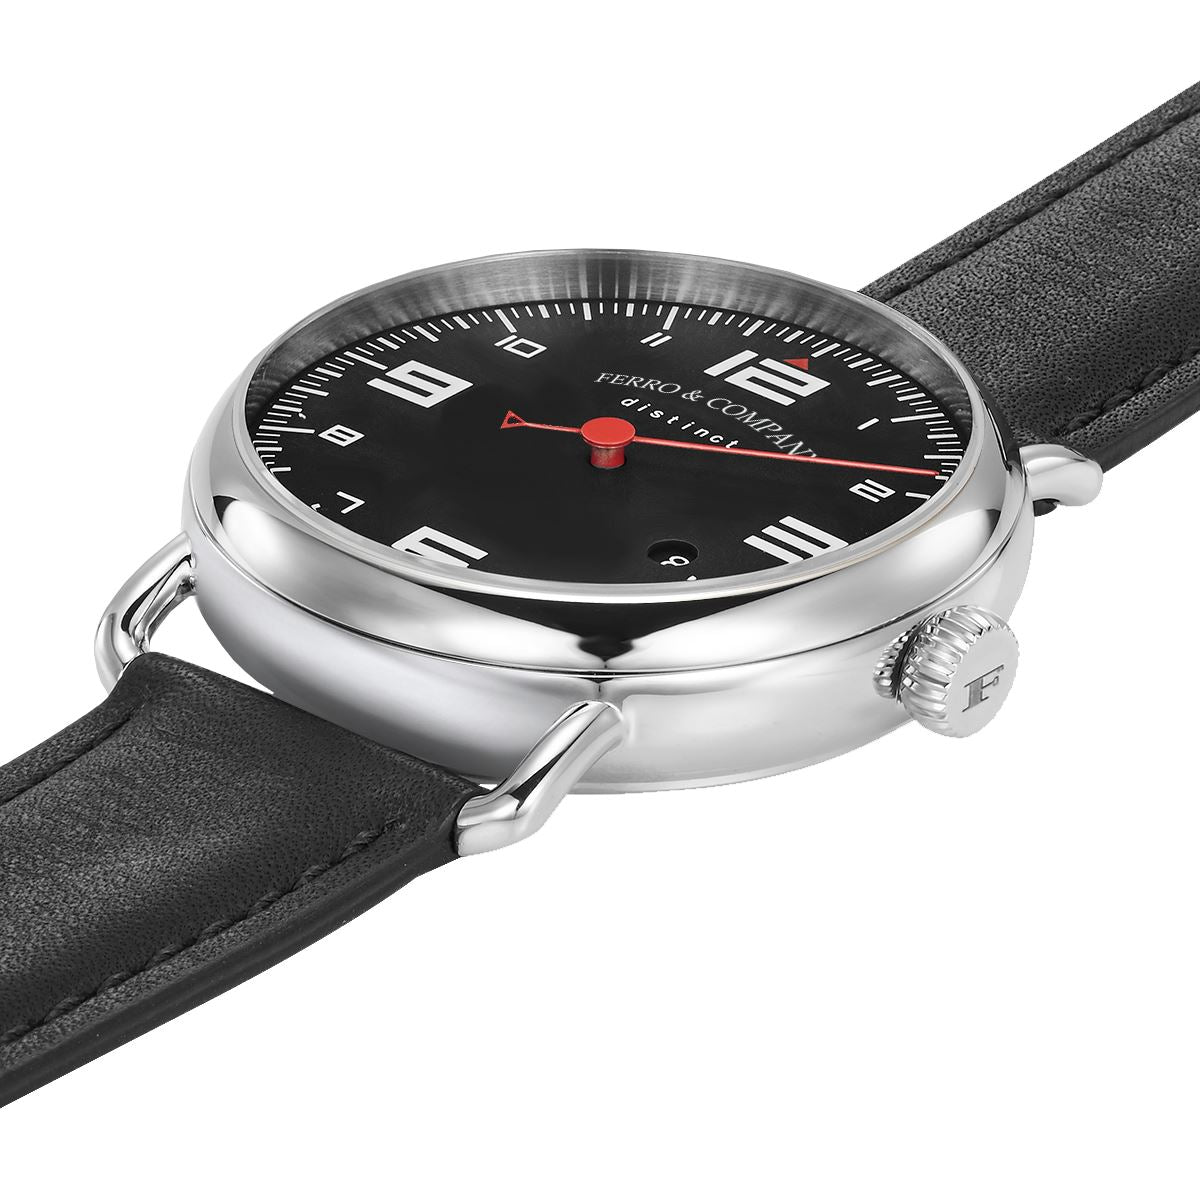 Ferro Watches Distinct 2 Vintage Style Race One Hand Watch Black - Ferro &amp; Company Watches